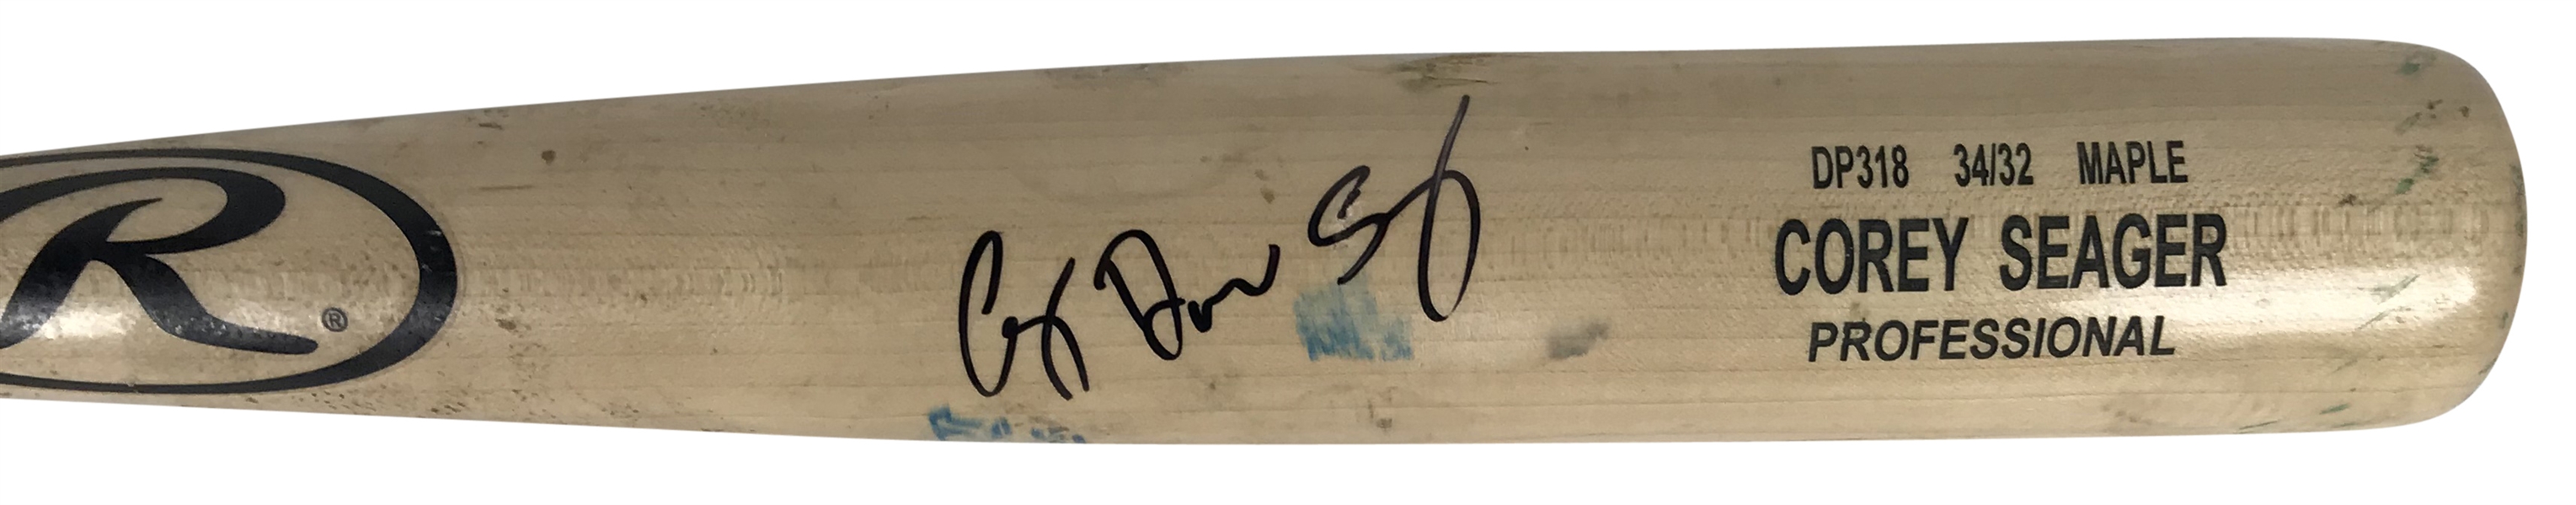 Corey Seager Signed & Game Used 2016 Maple DP318 Baseball Bat (JSA & Mears Guaranteed)